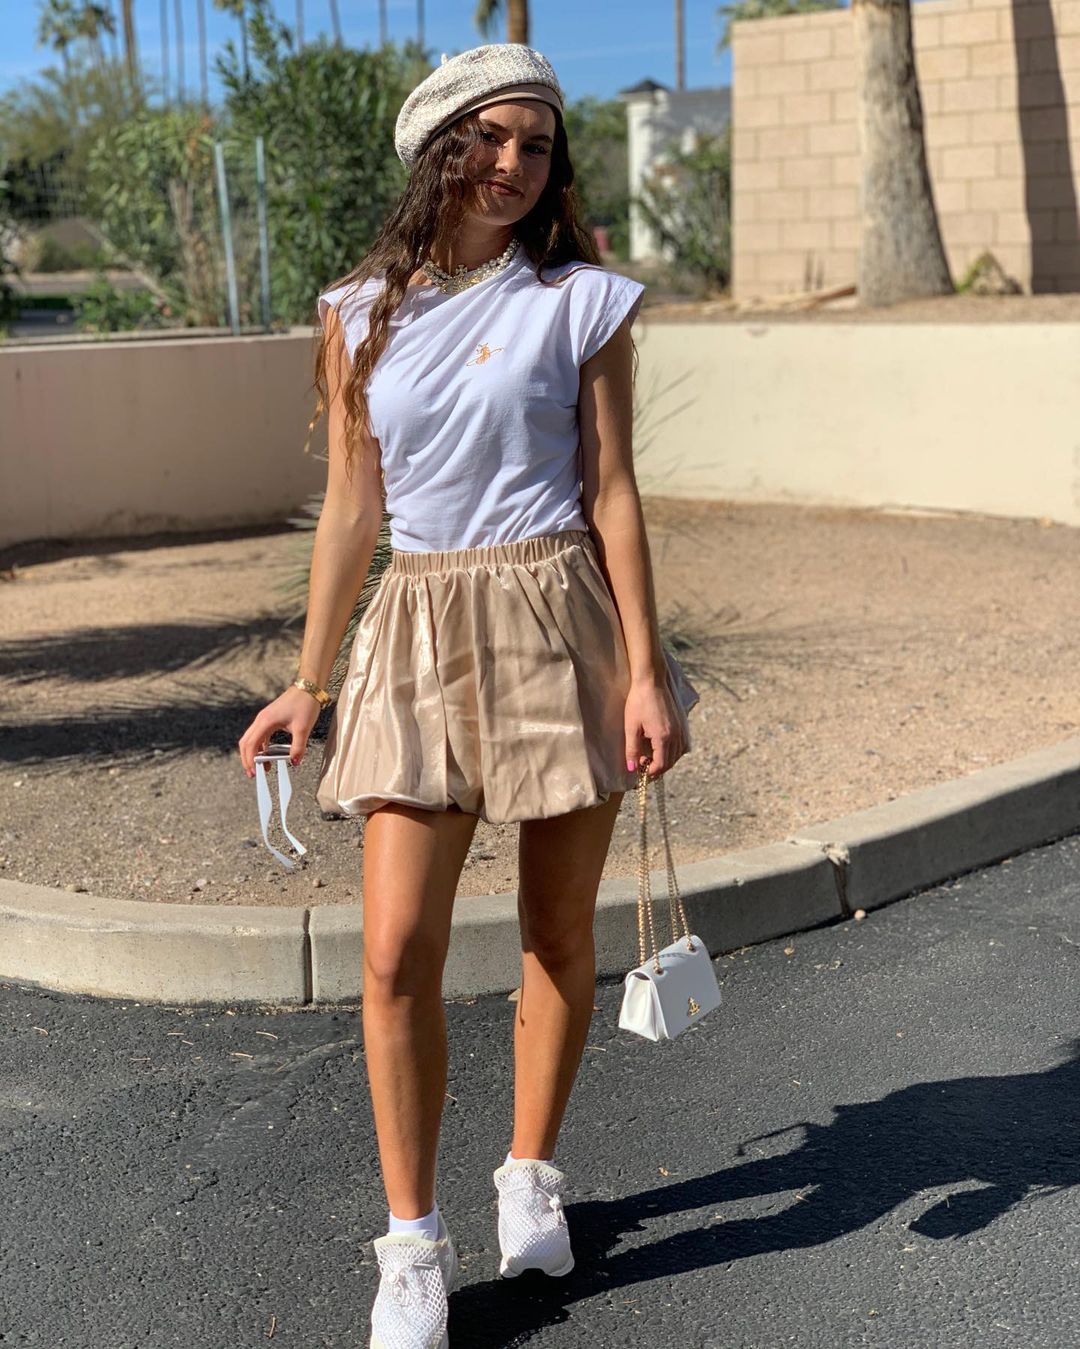 The Cool Floppy Skirt Look Of Madeline Caroll